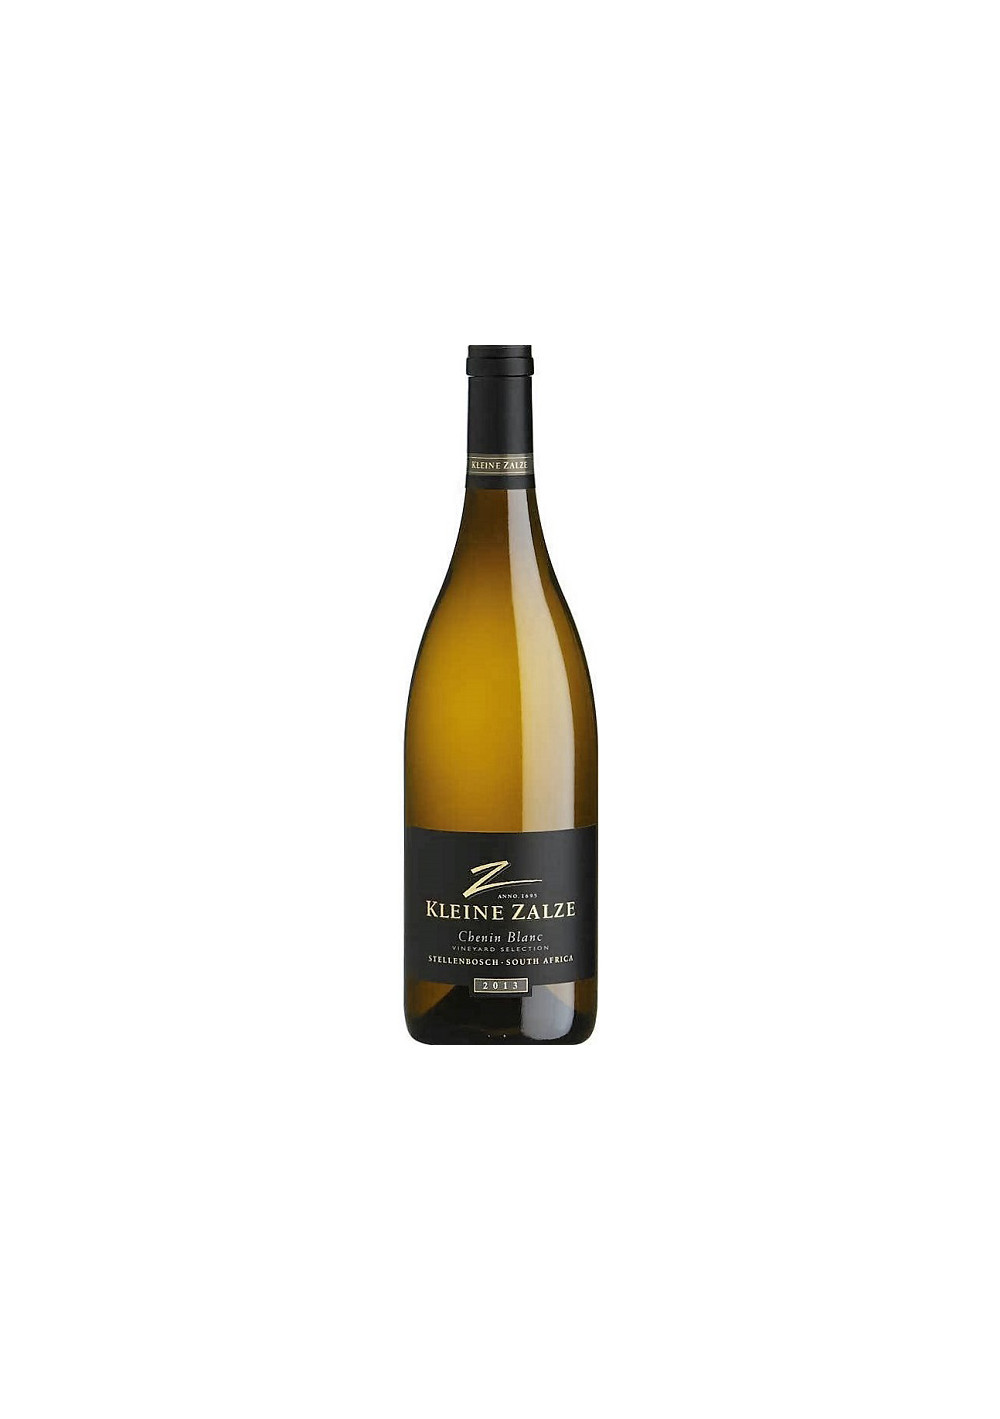 Chenin Blanc Vineyard Selection 2016 Kleine Zalze